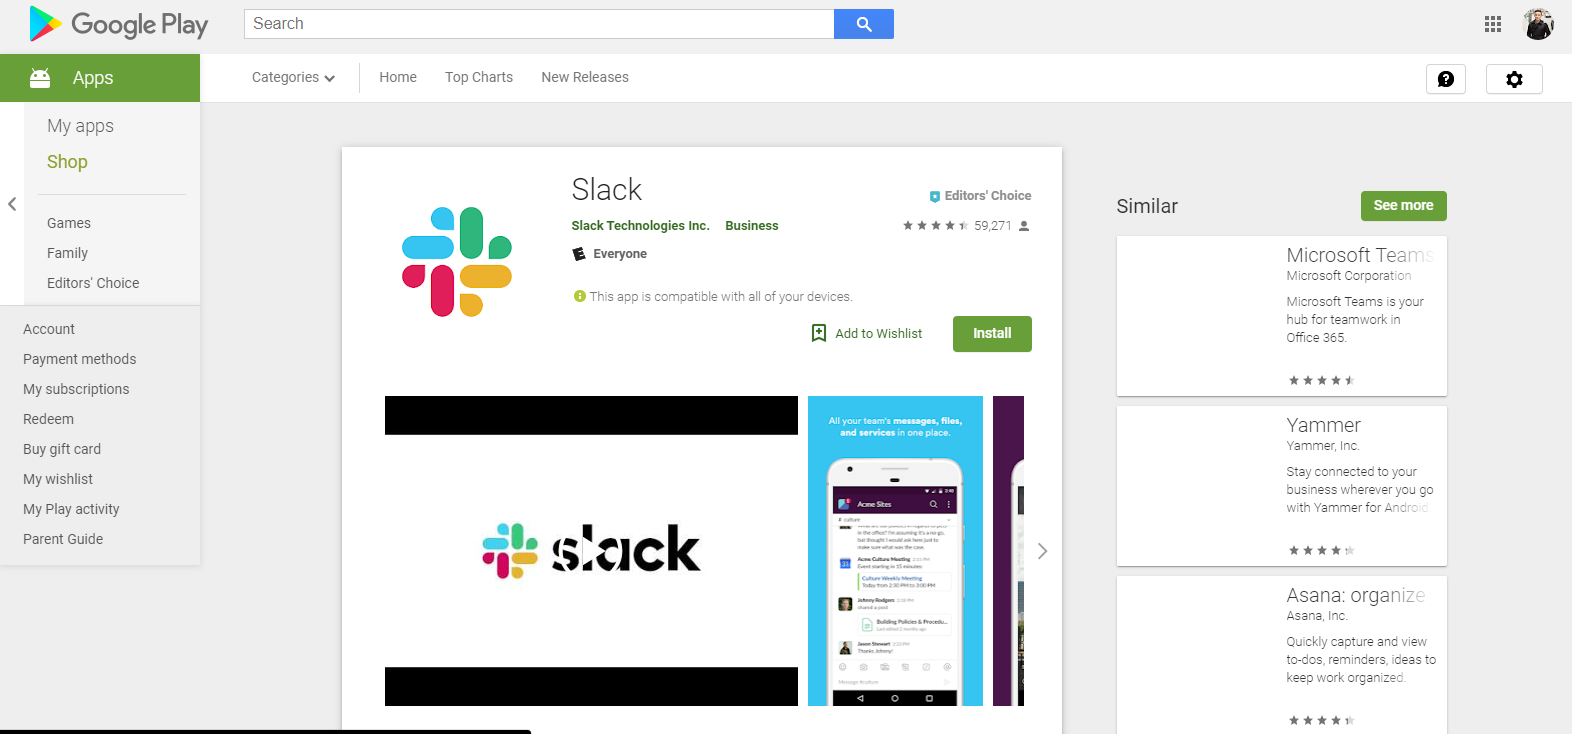 Slack mobile app